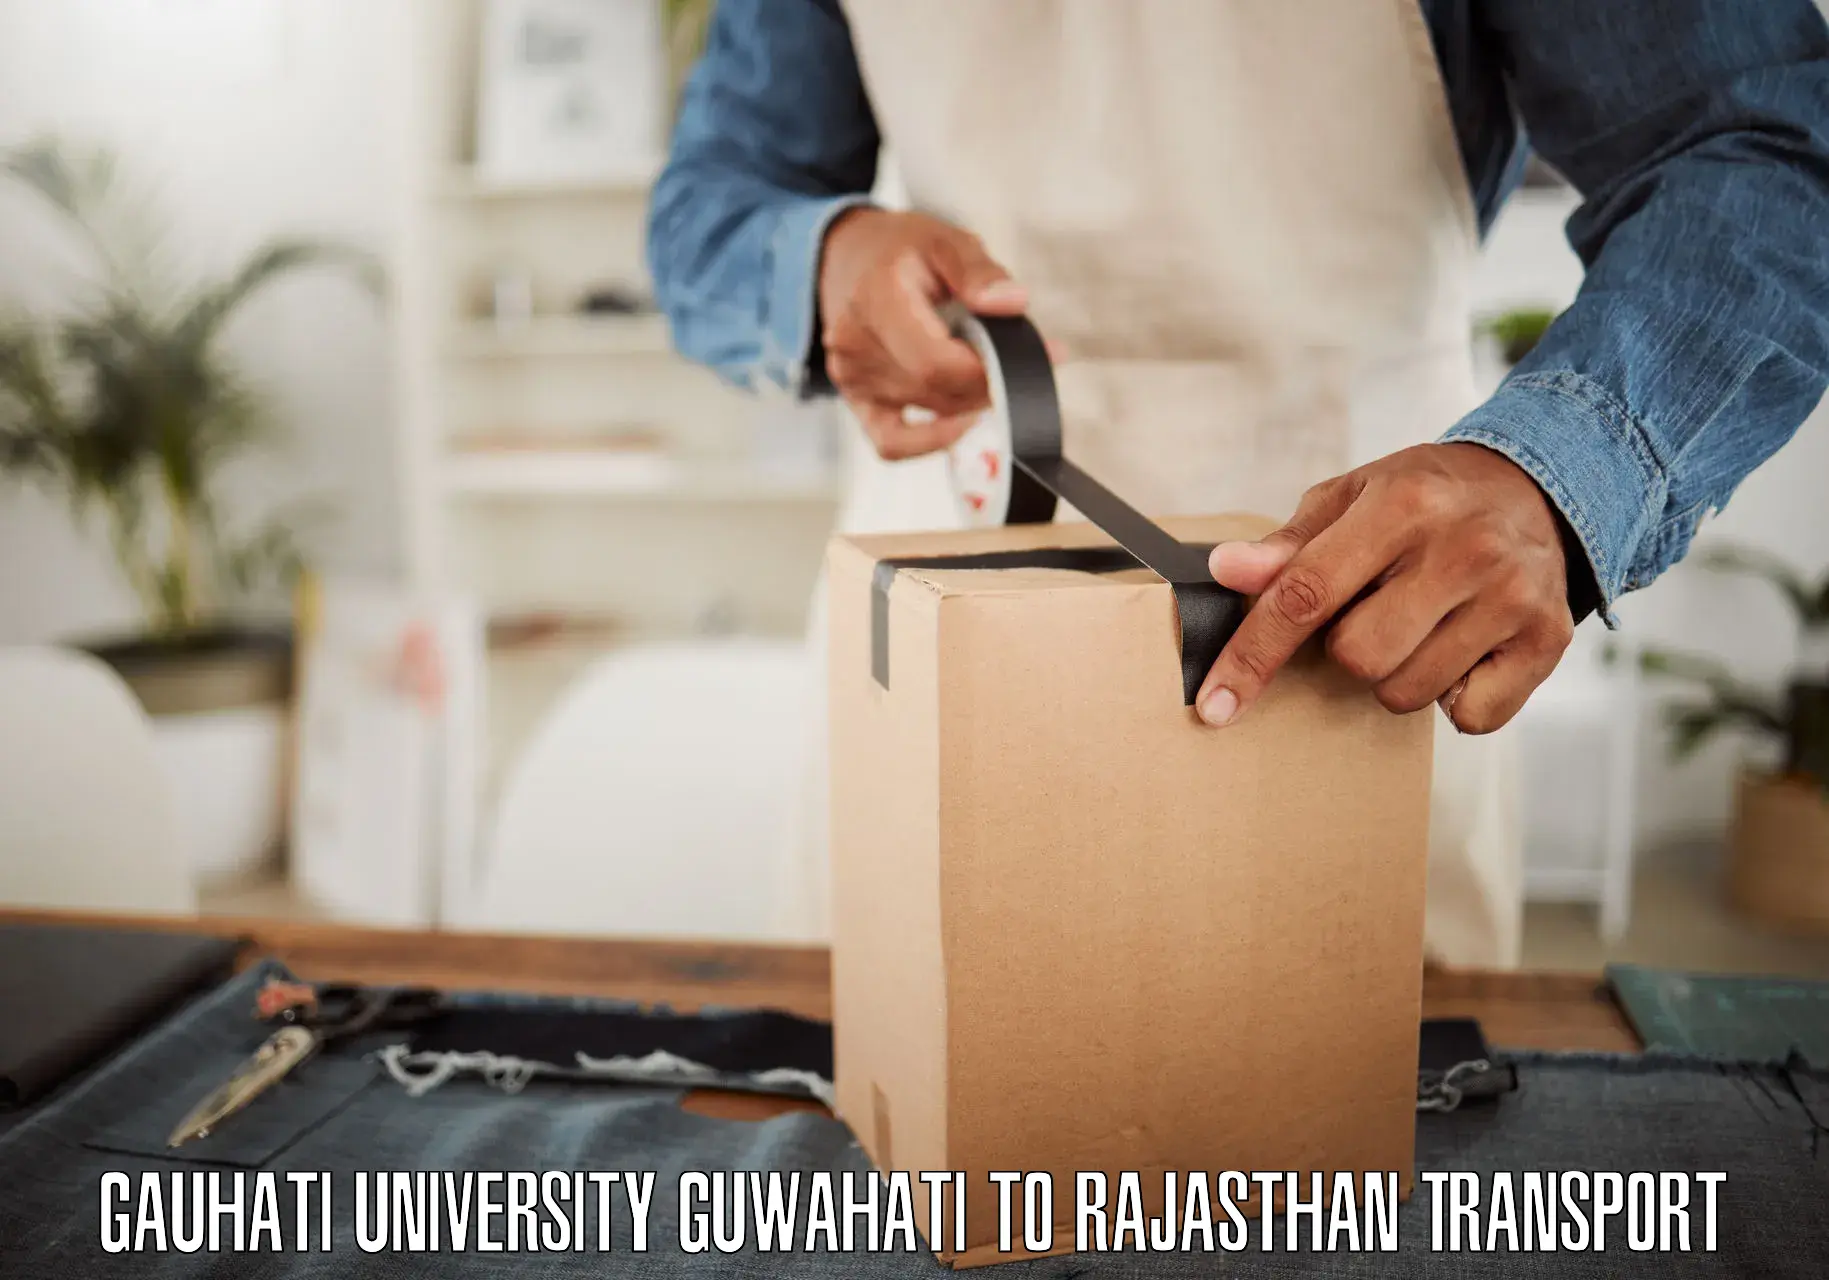 Commercial transport service Gauhati University Guwahati to Jhalawar